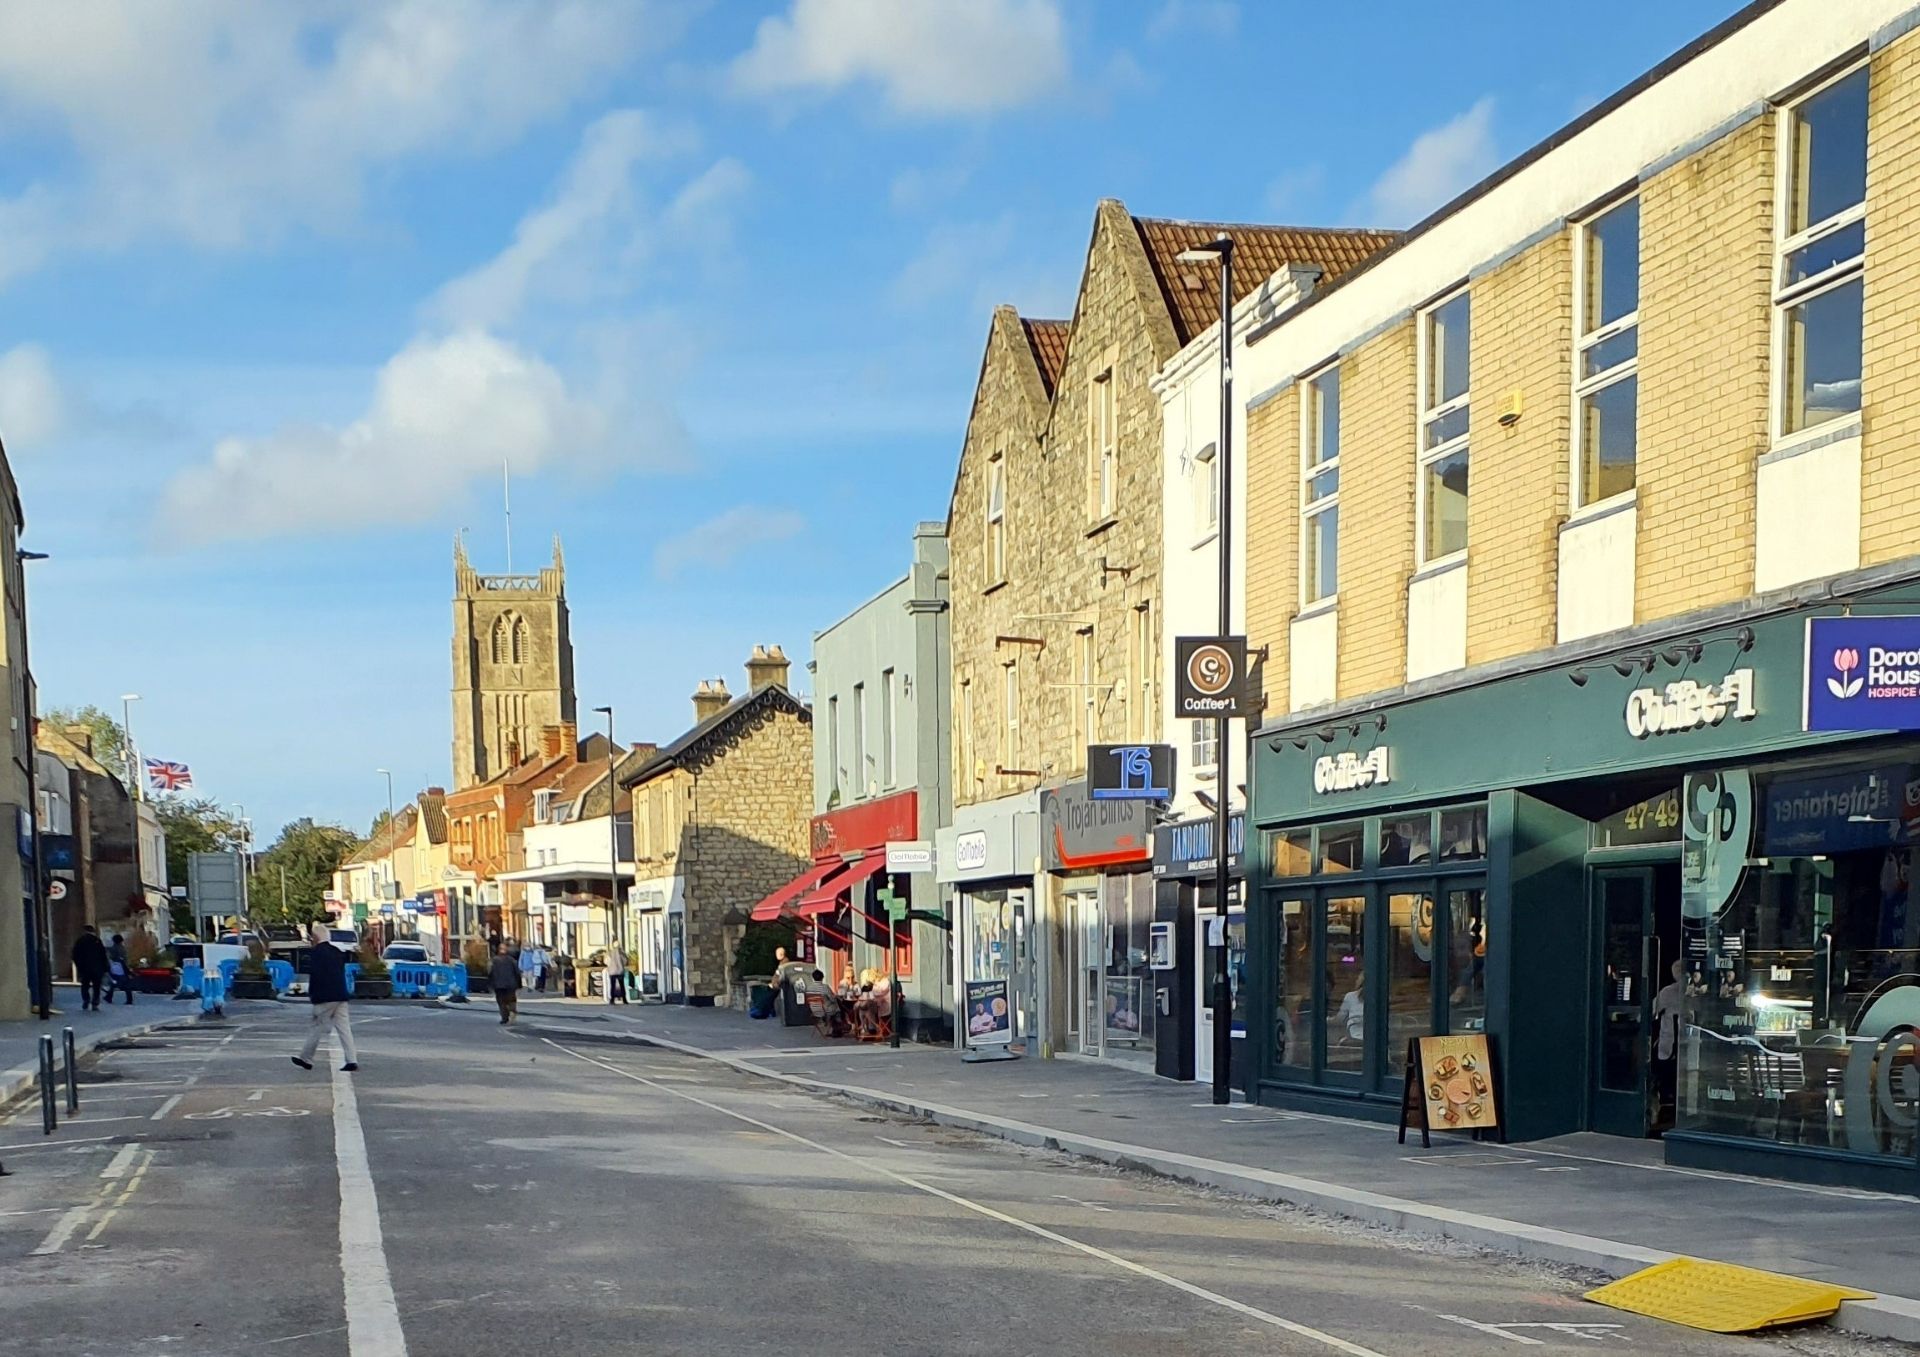 A shot of Keynsham High Street looking towards the church